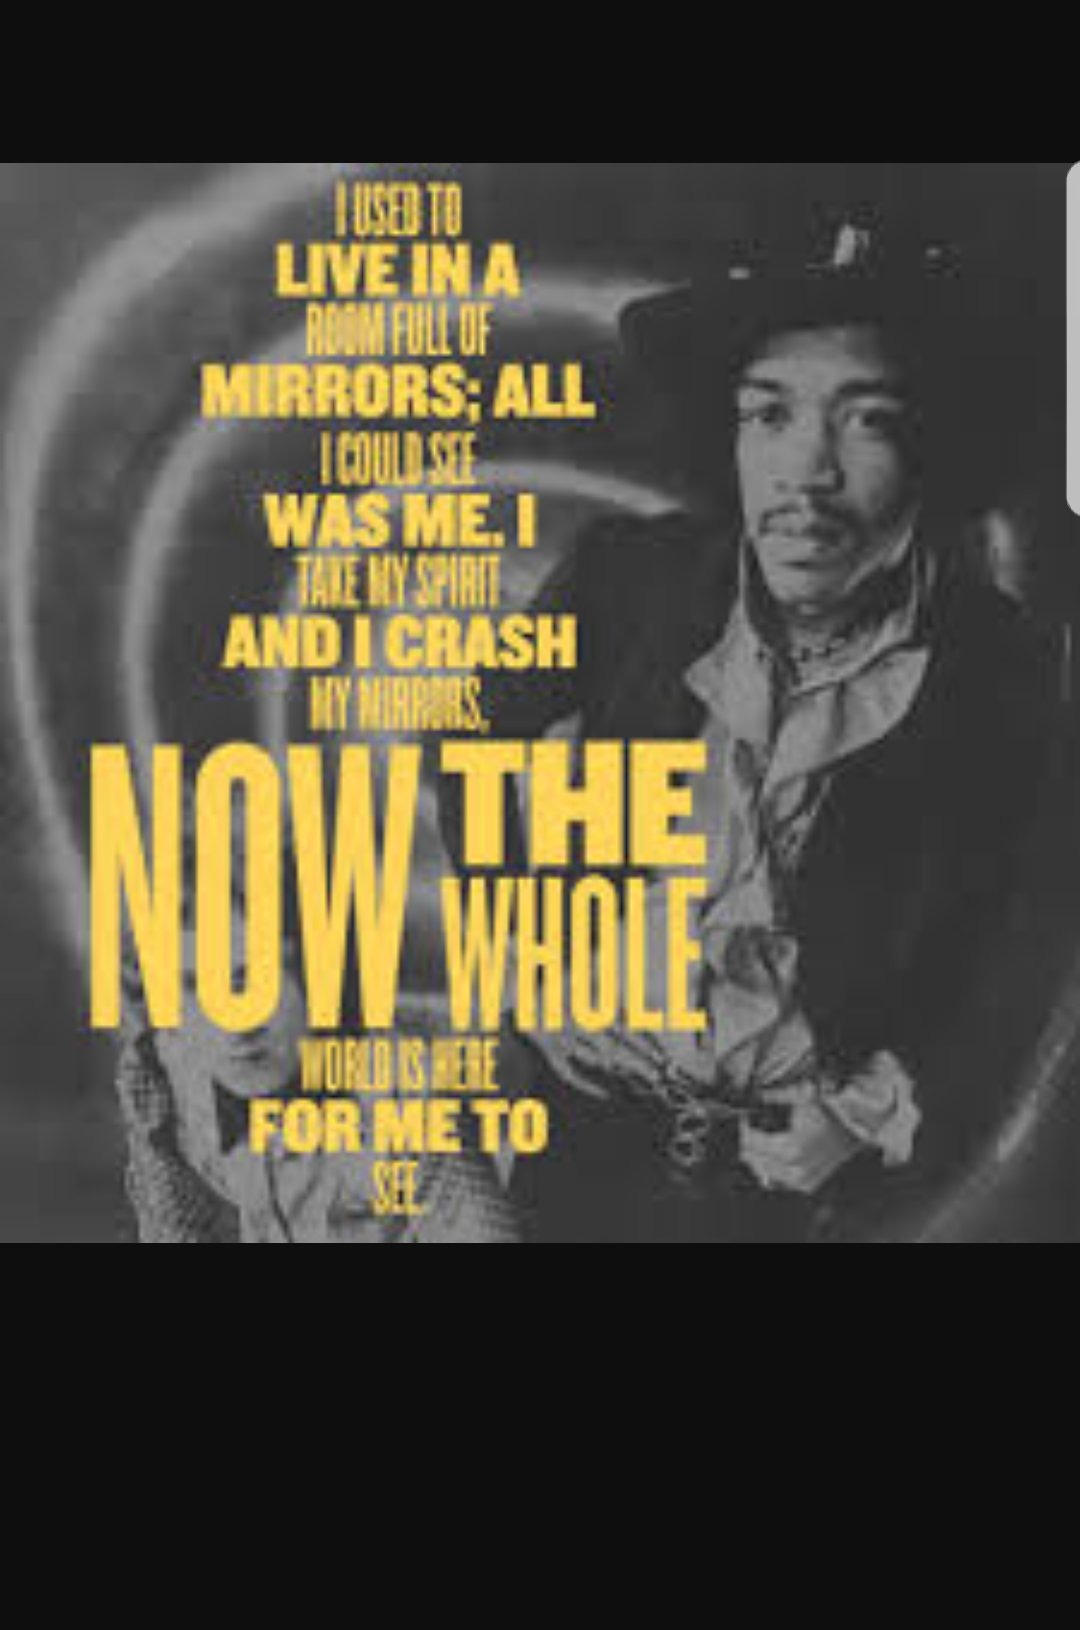 Happy 75th birthday jimi Hendrix 